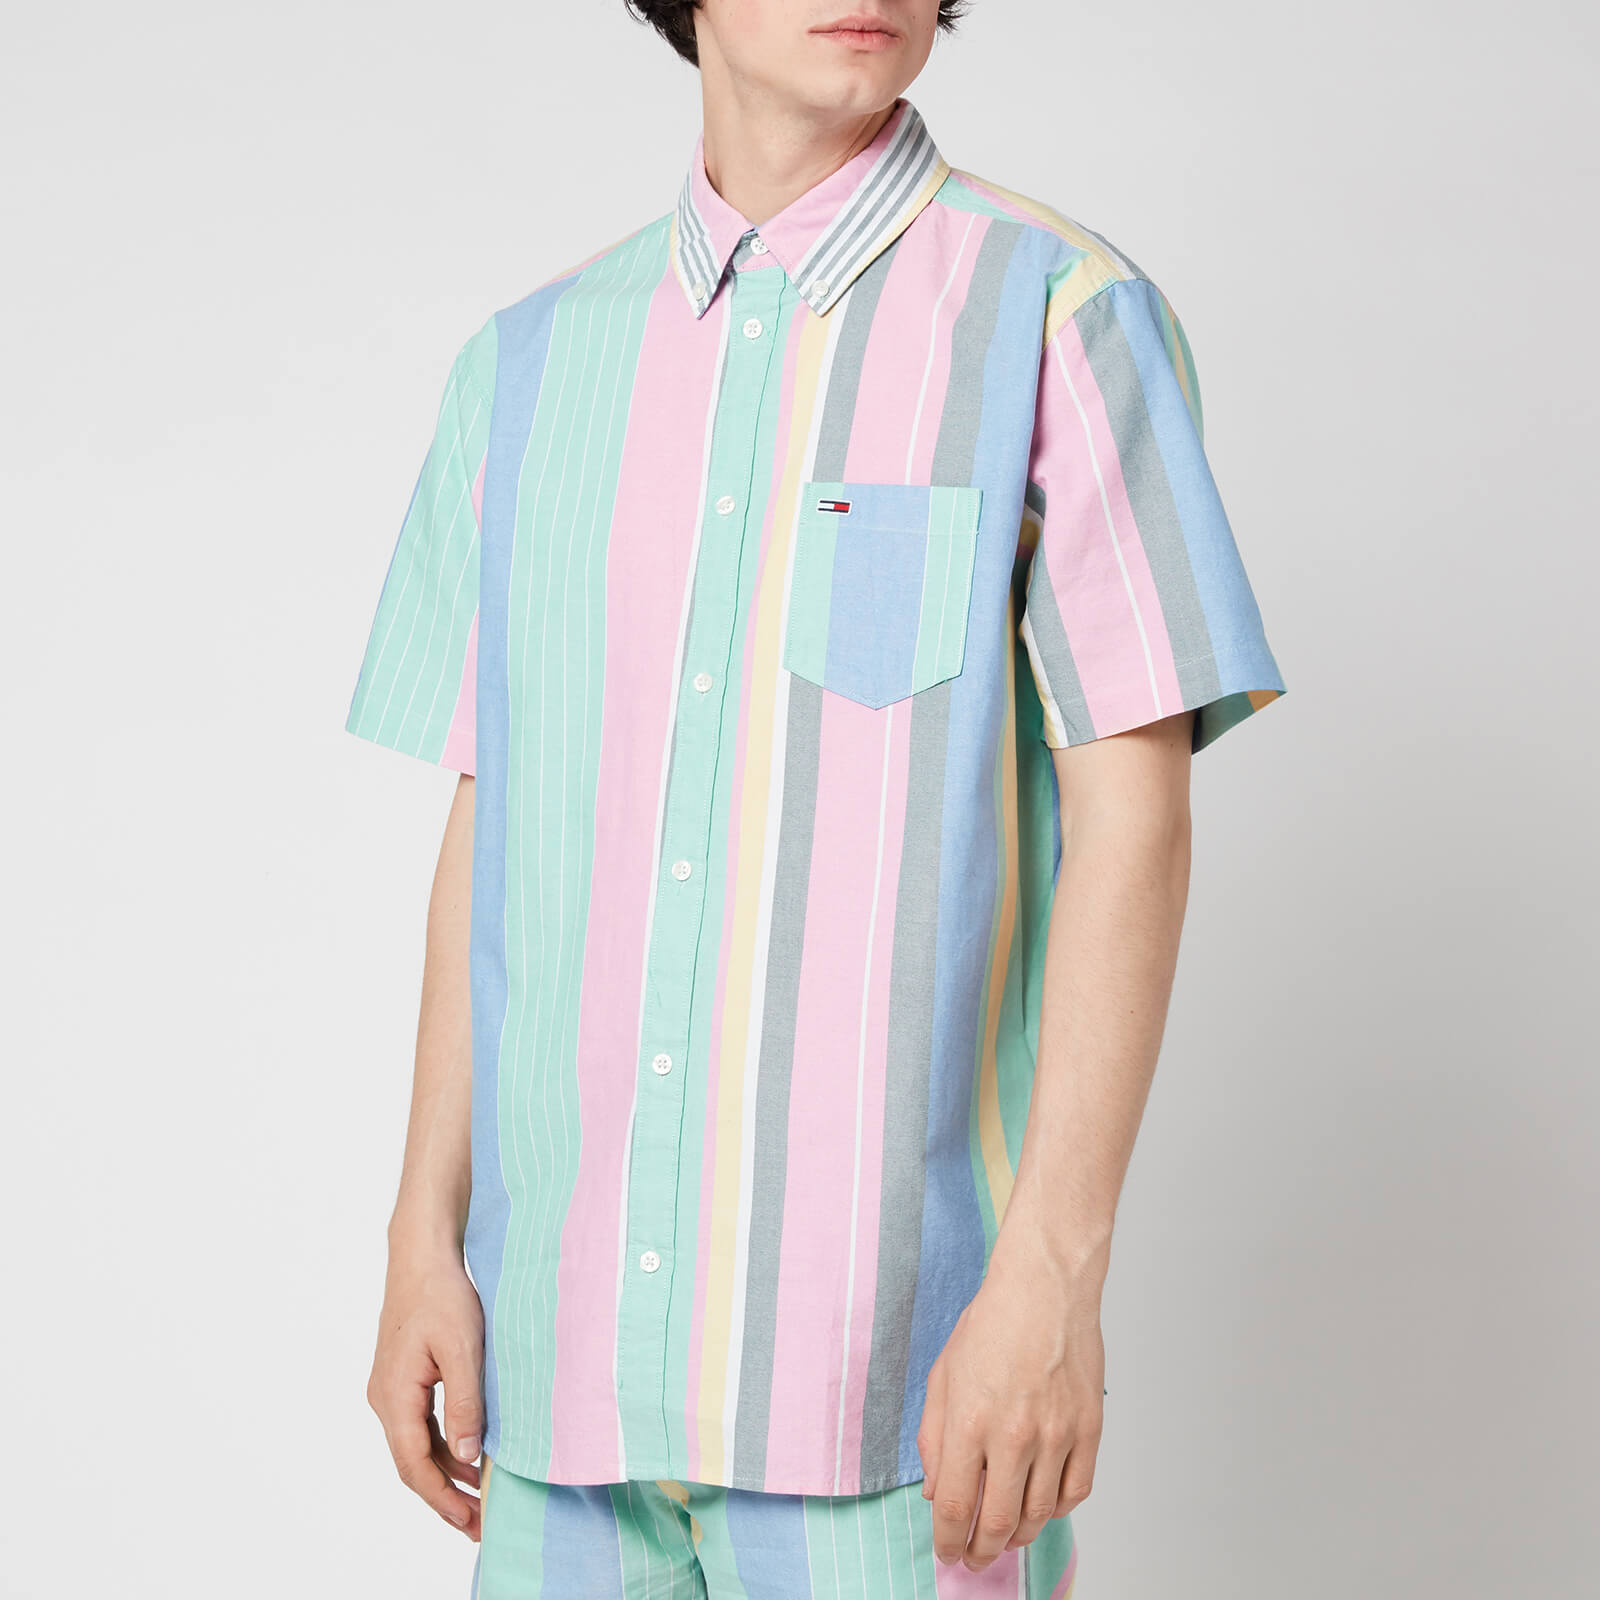 Tommy Jeans Men's Stripe 2 Short Sleeve Shirt - Romantic Pink Multi - S